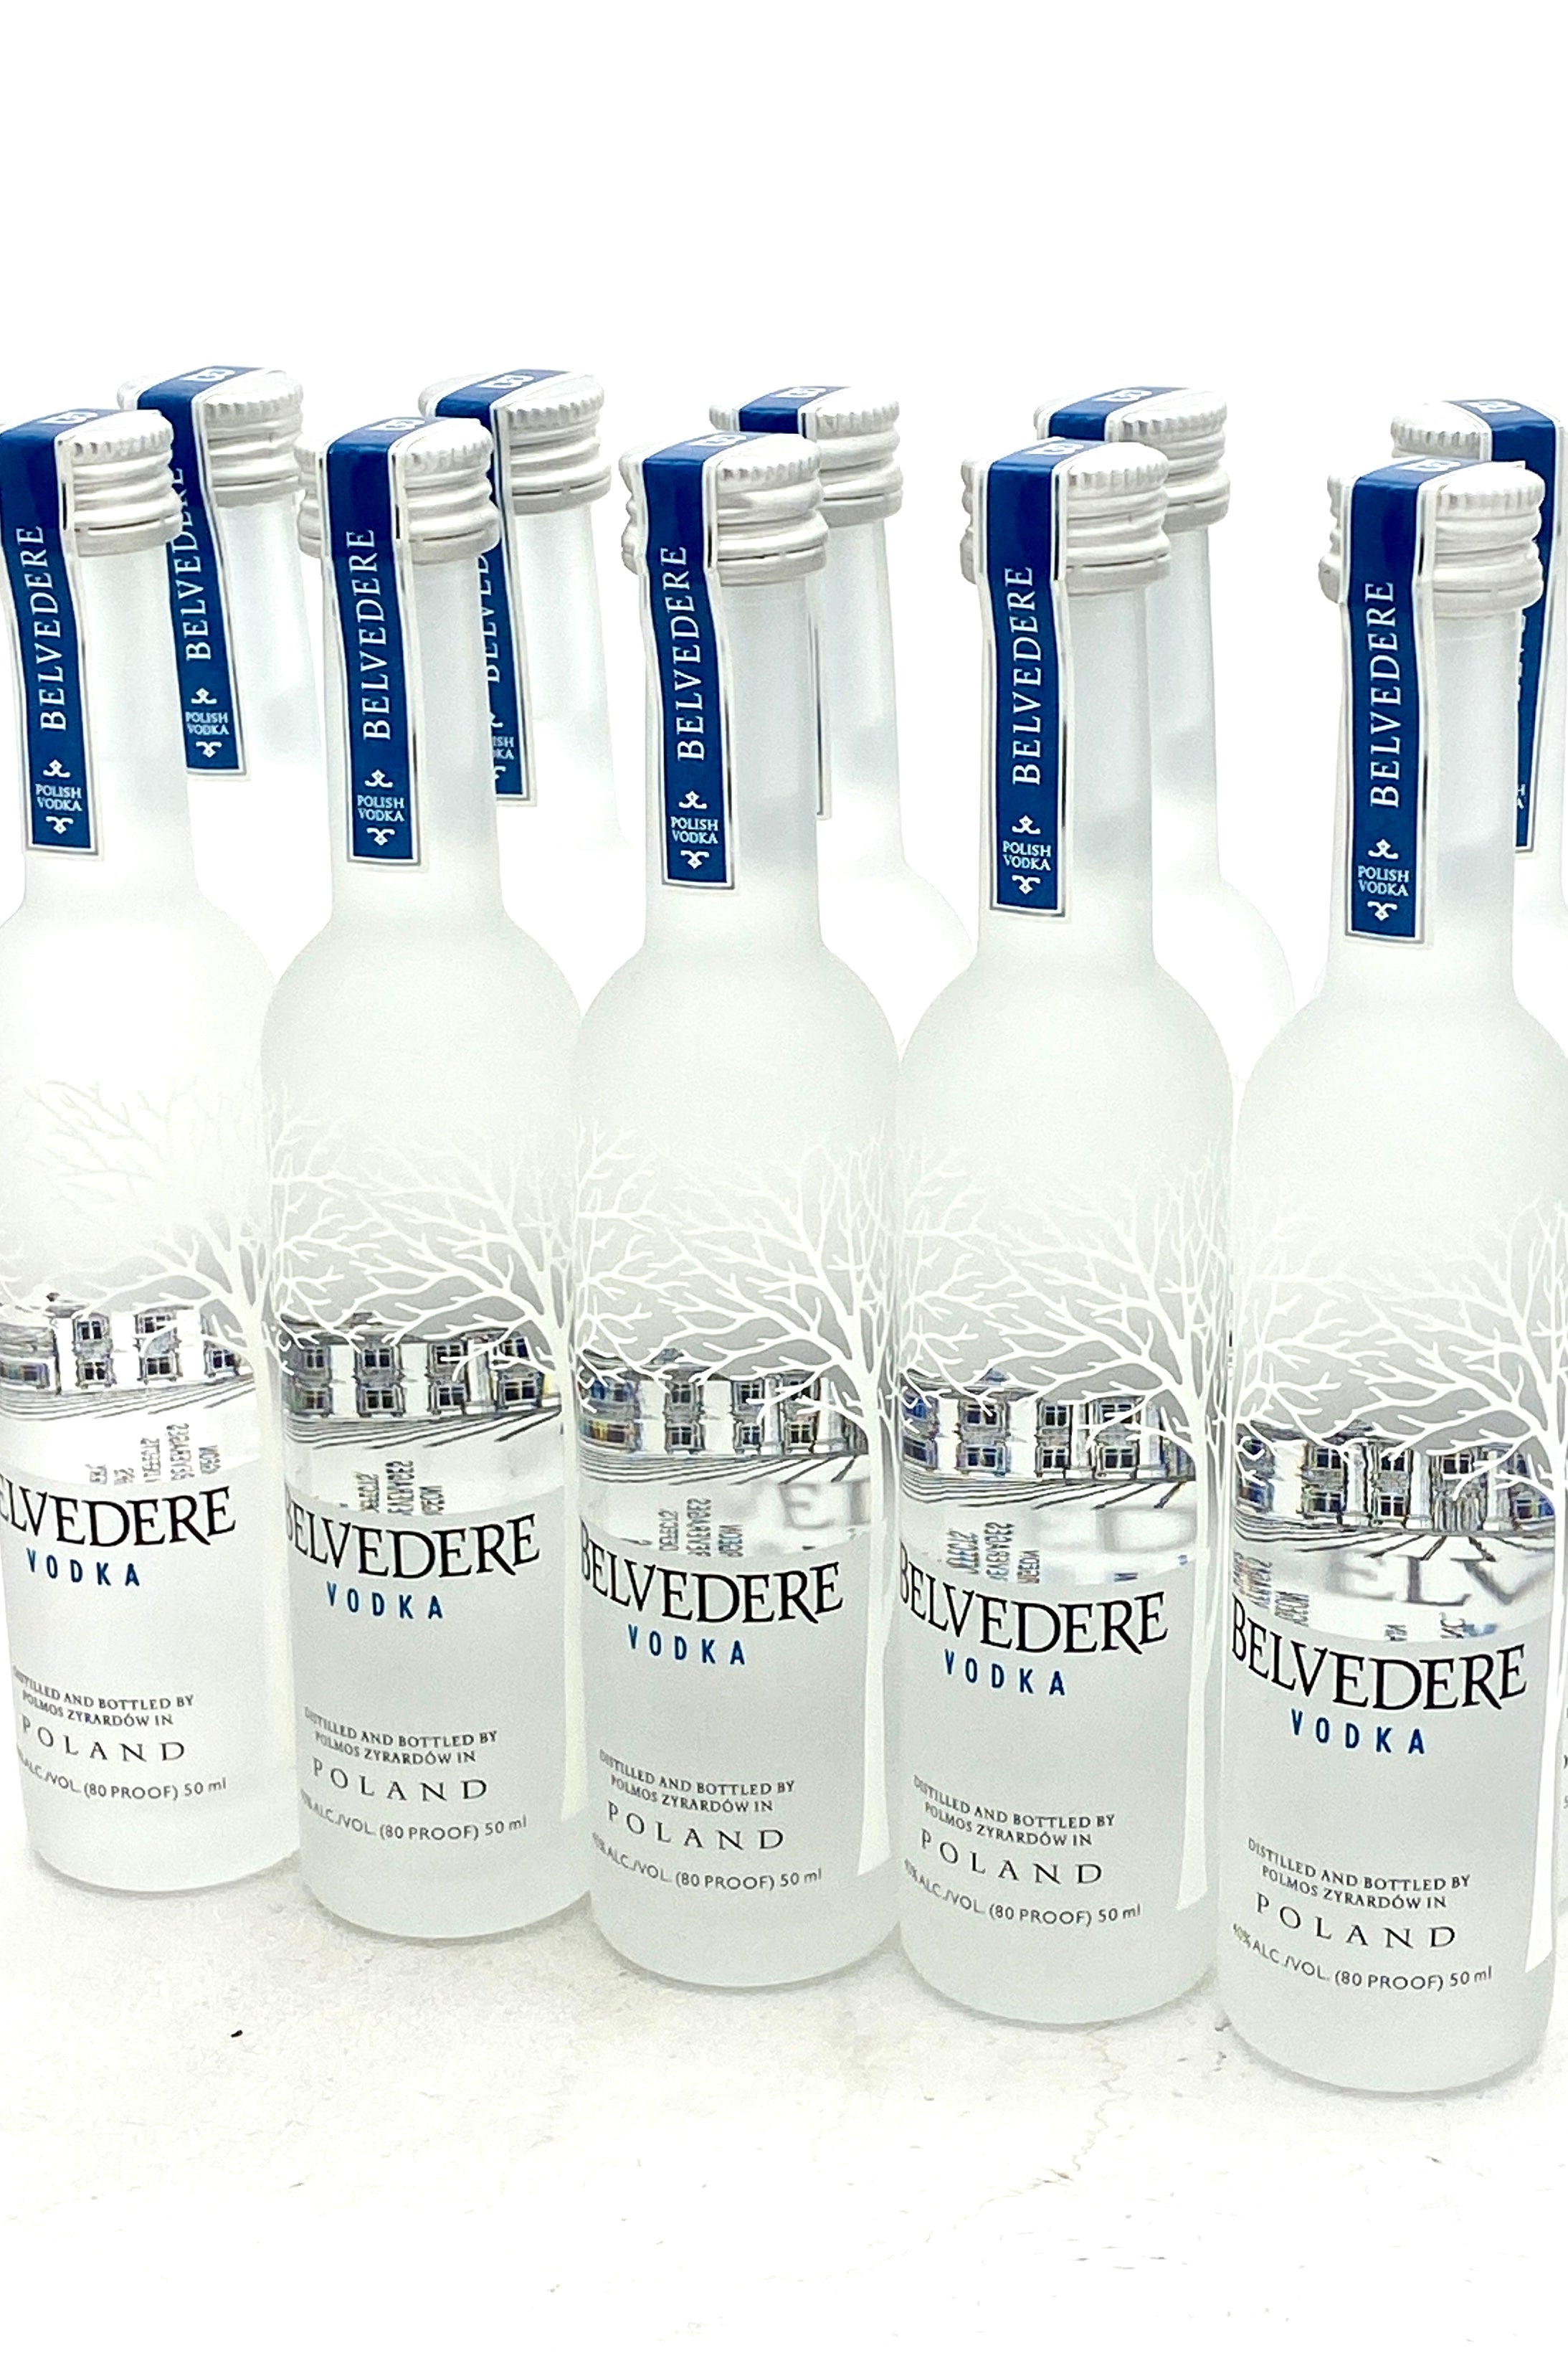 Belvedere Vodka - Small Bottle : Buy from World's Best Drinks Shop